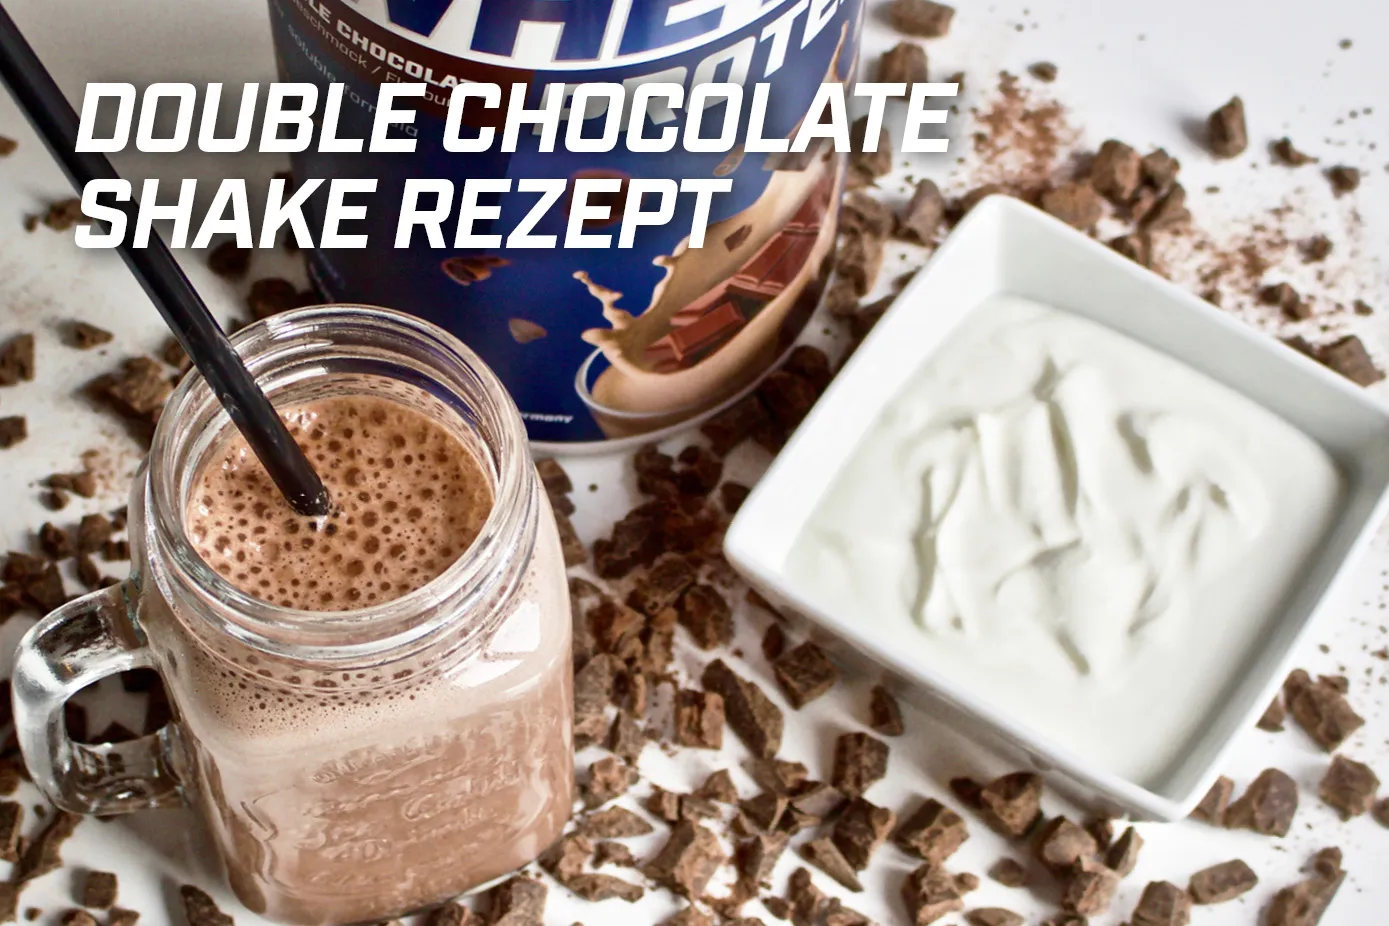 08-03-18-double-chocolate-shake-rezept-energybody-systems